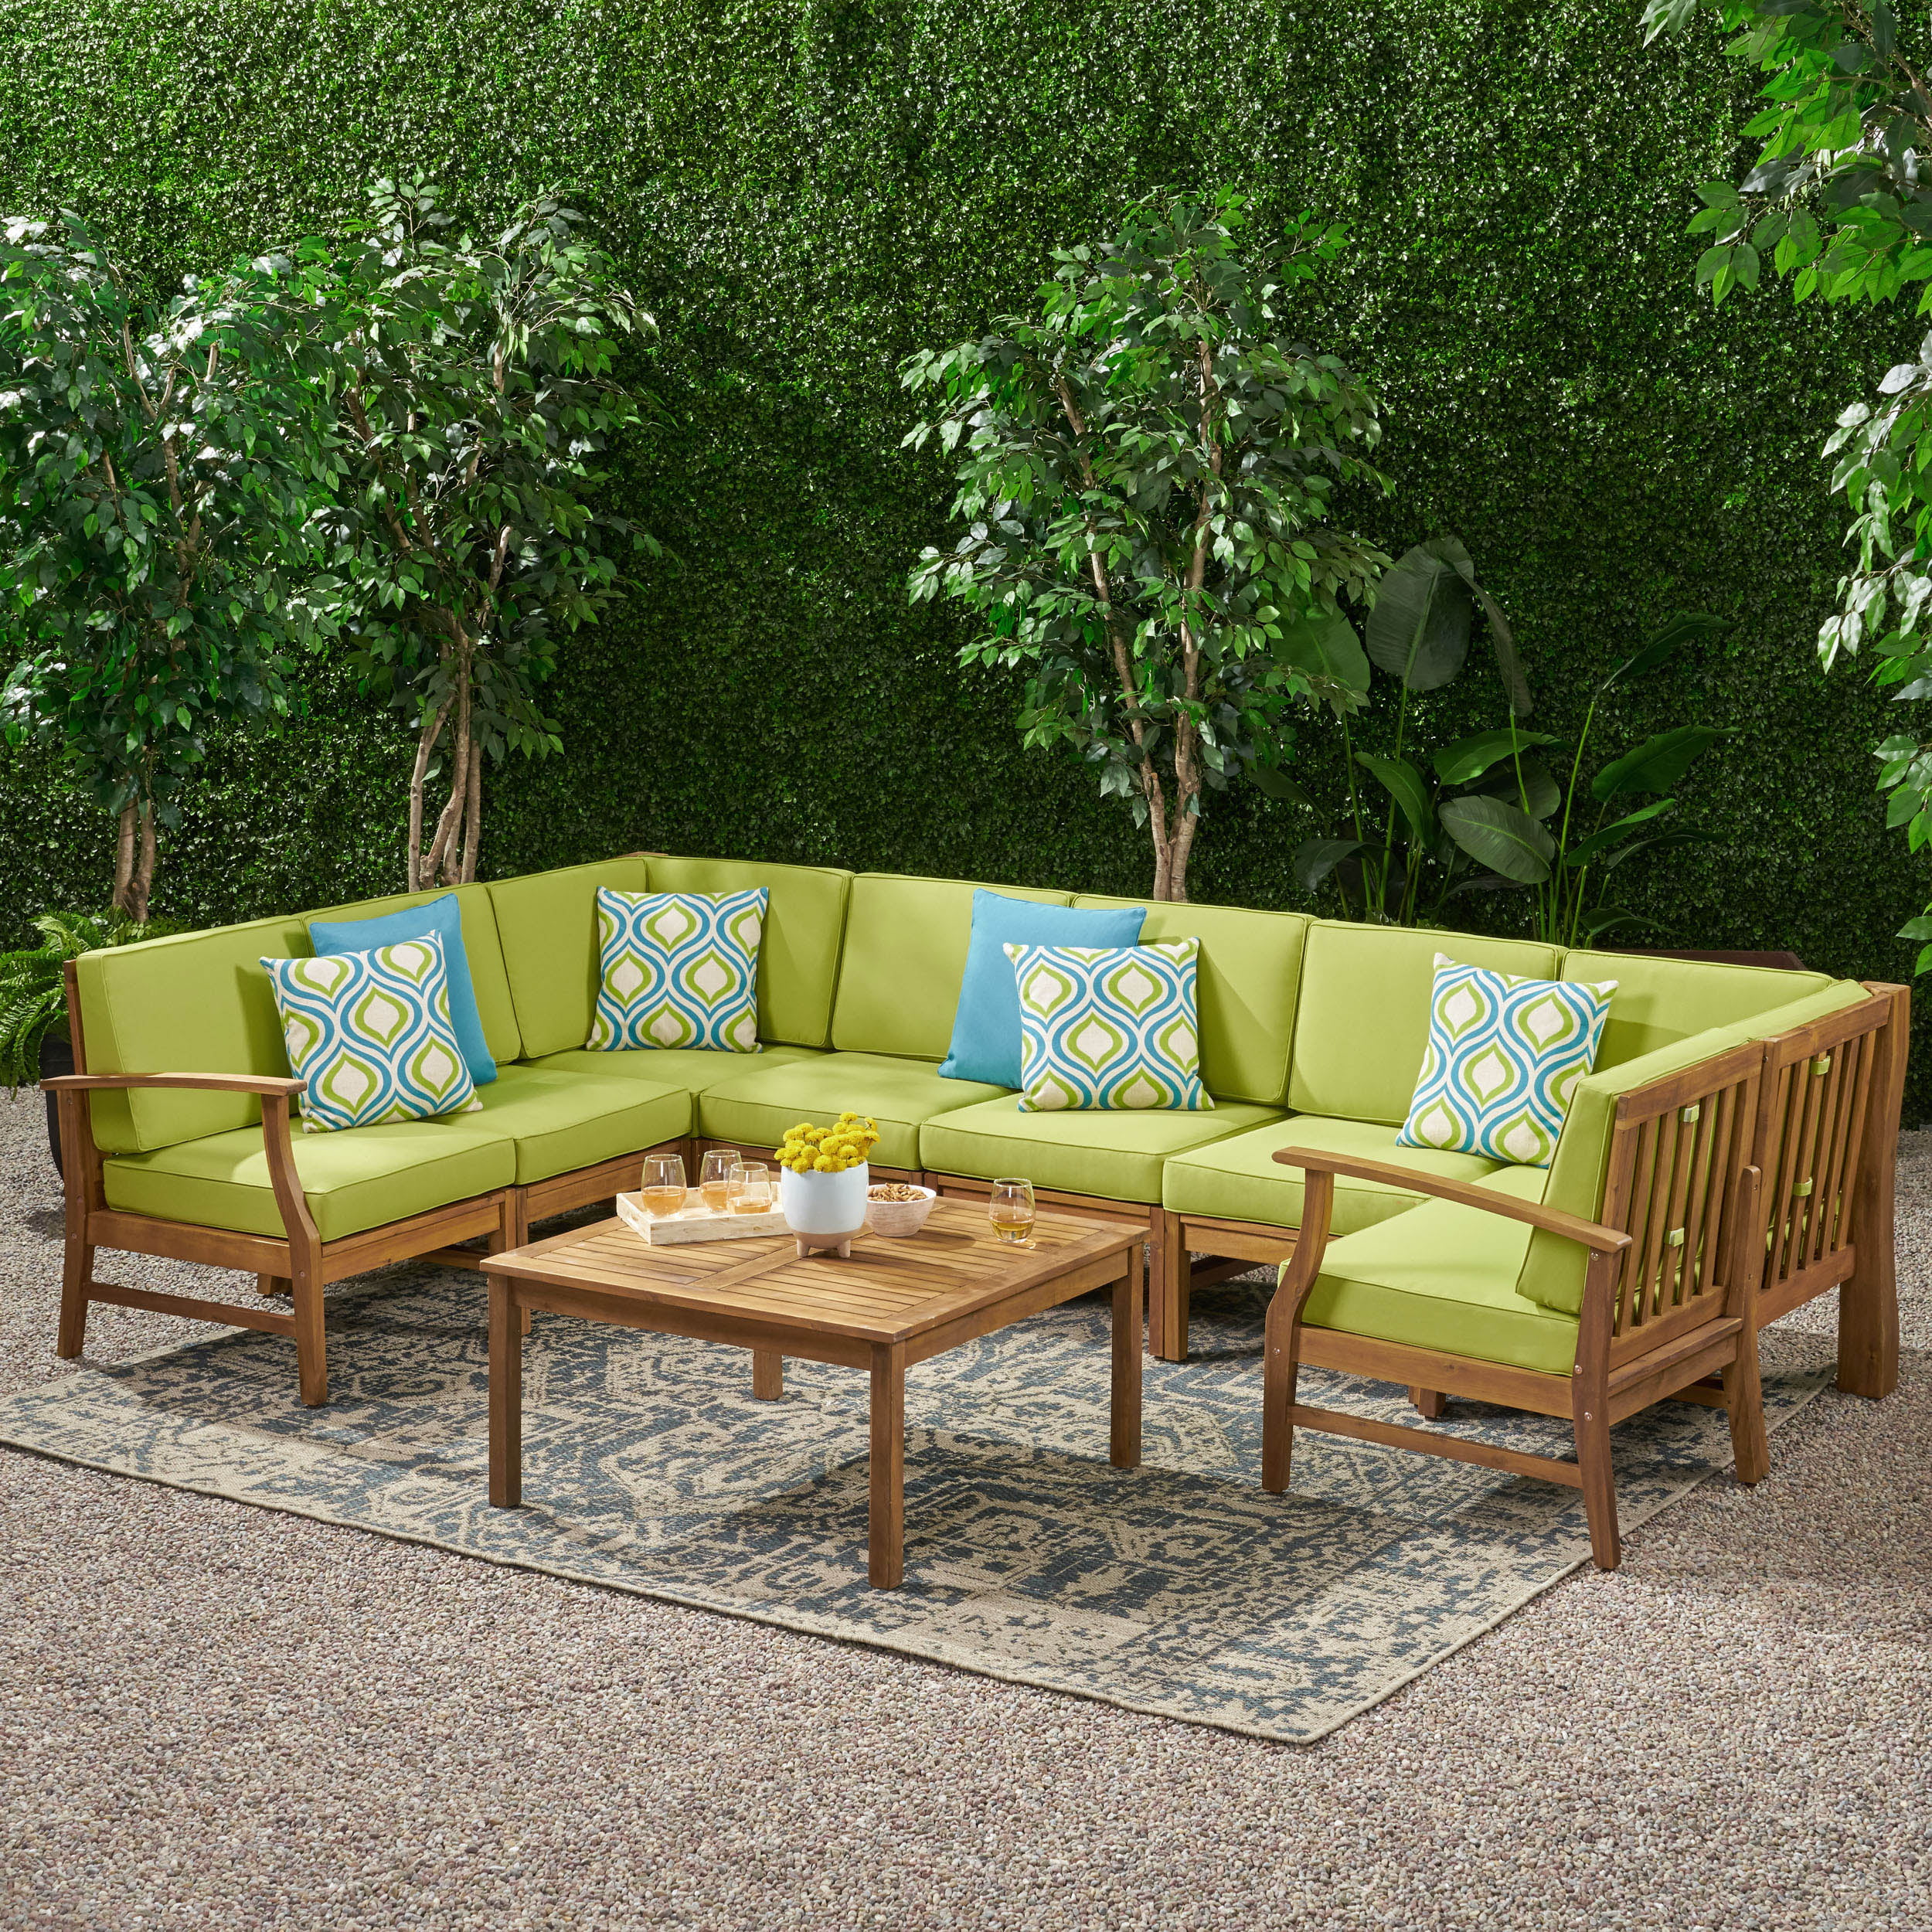 Long lasting And Low maintenance Teak Outdoor Furniture